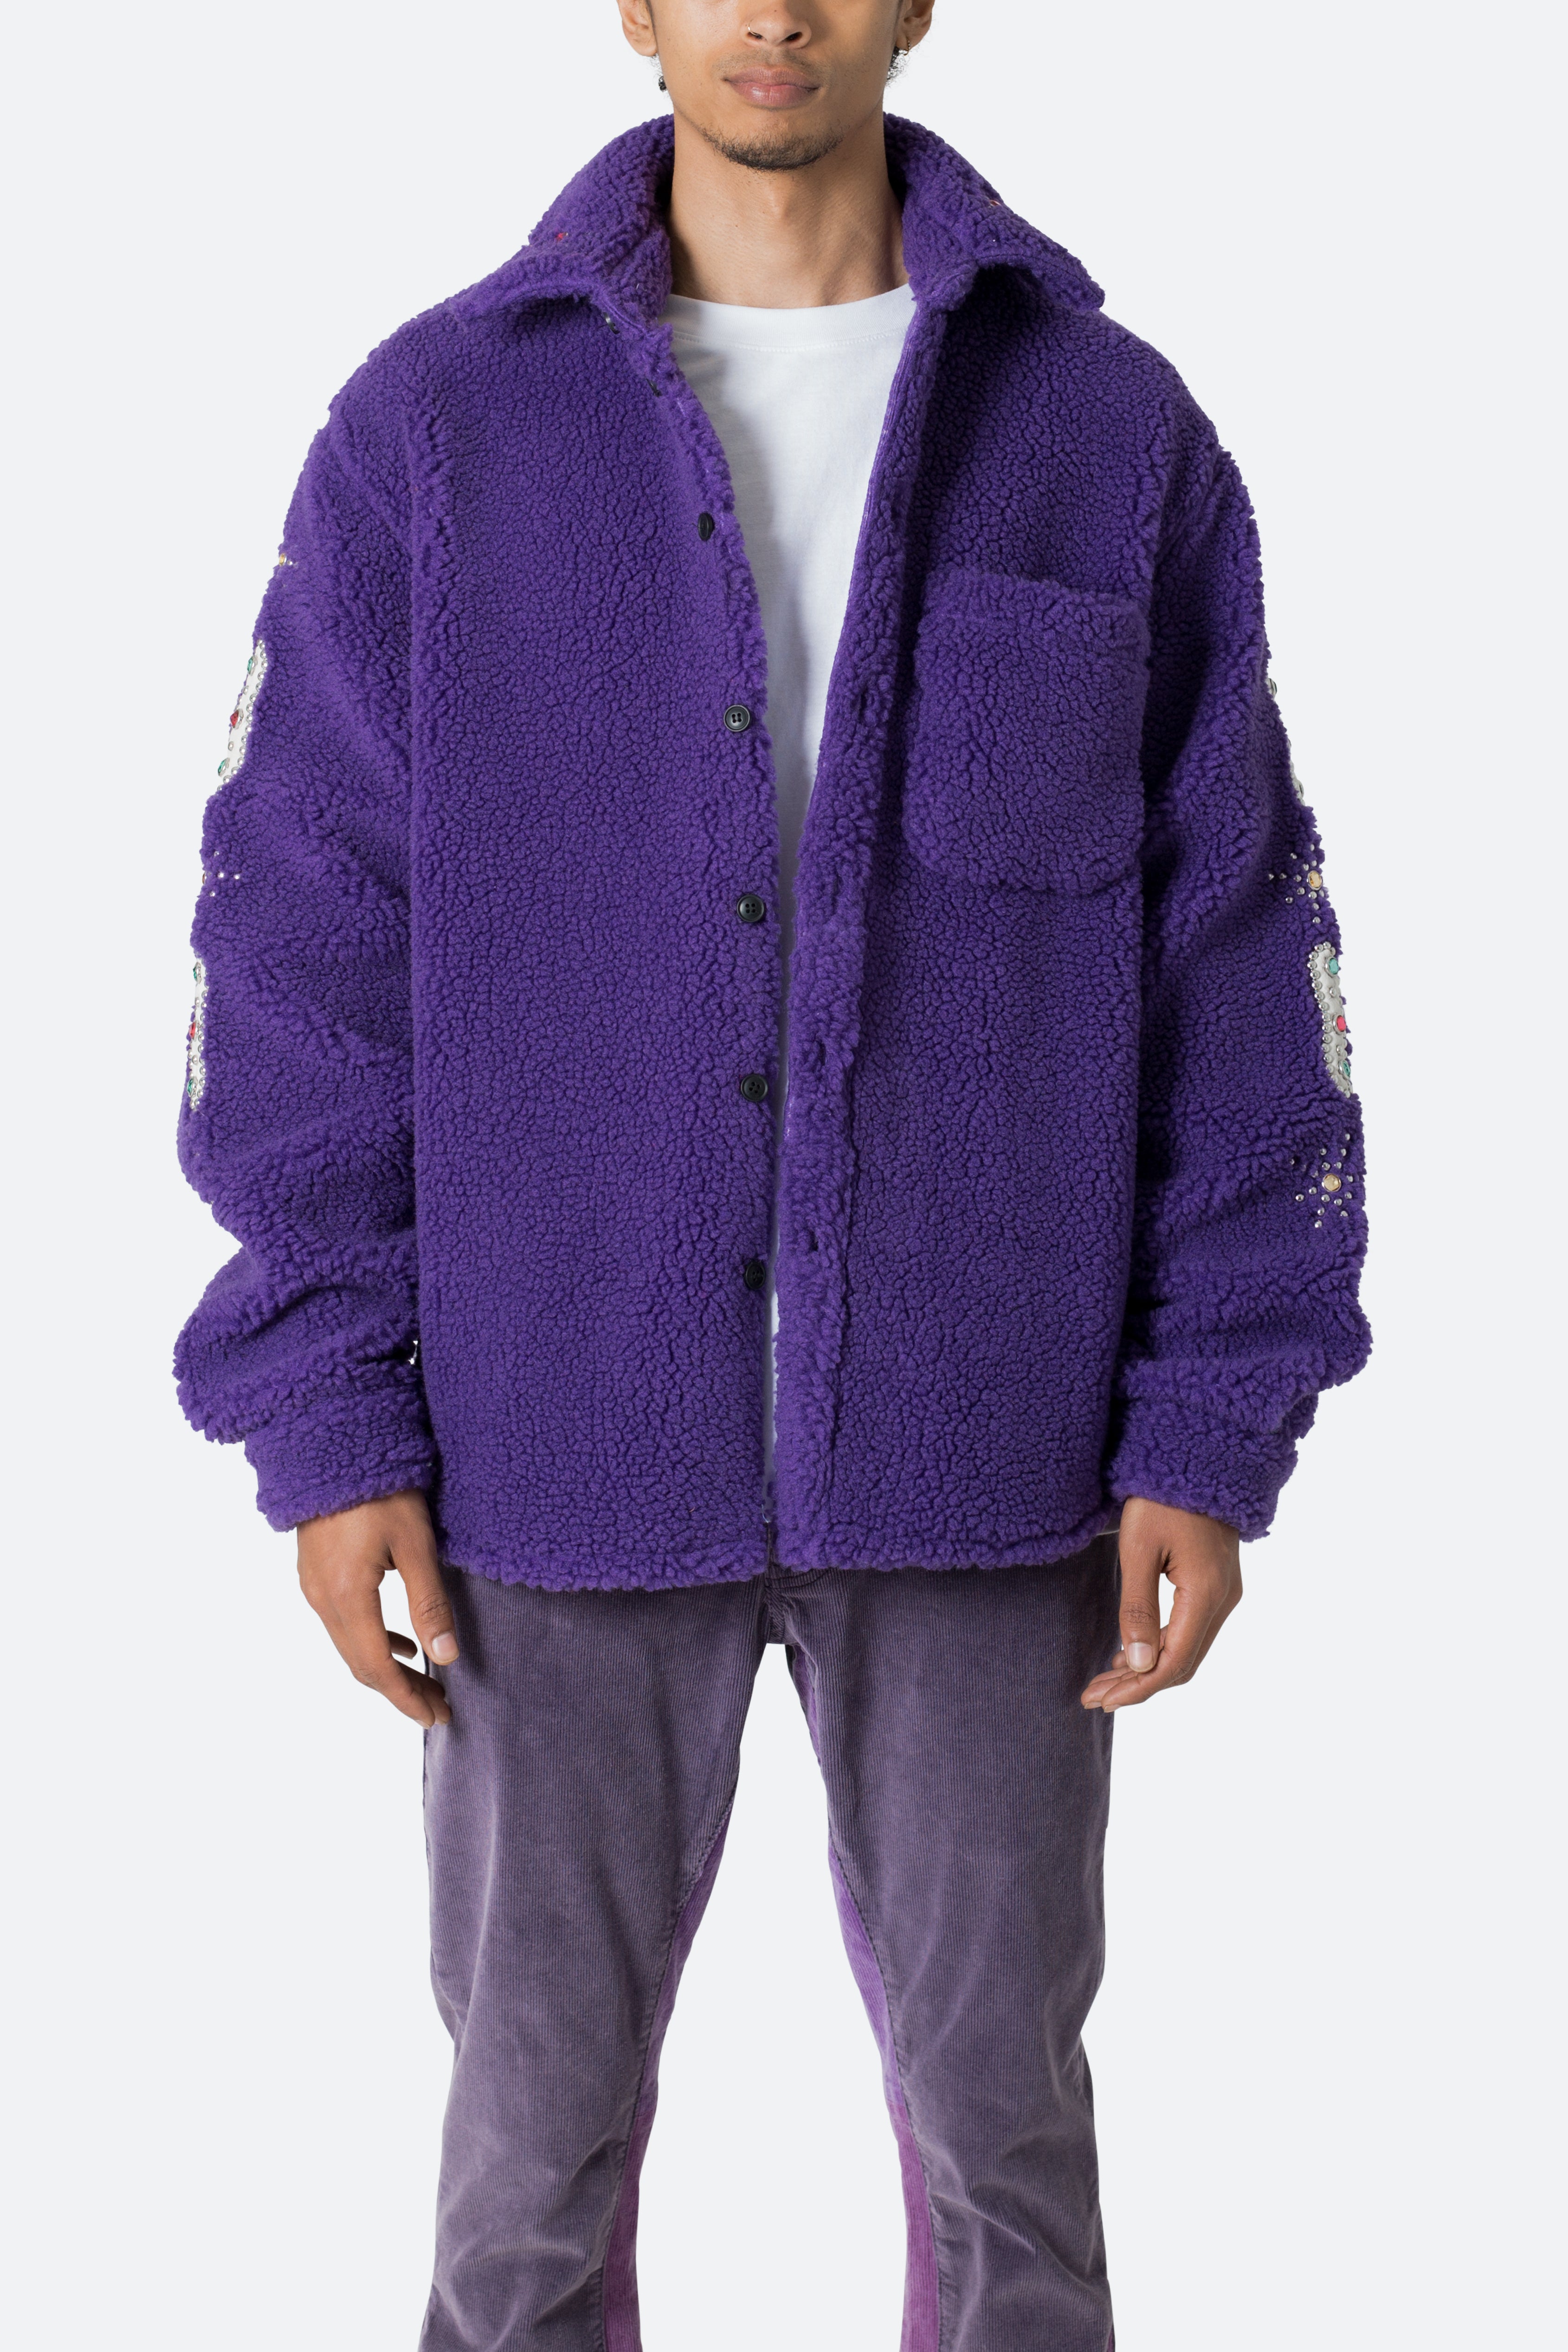 Jewel Sherpa Jacket - Purple, mnml